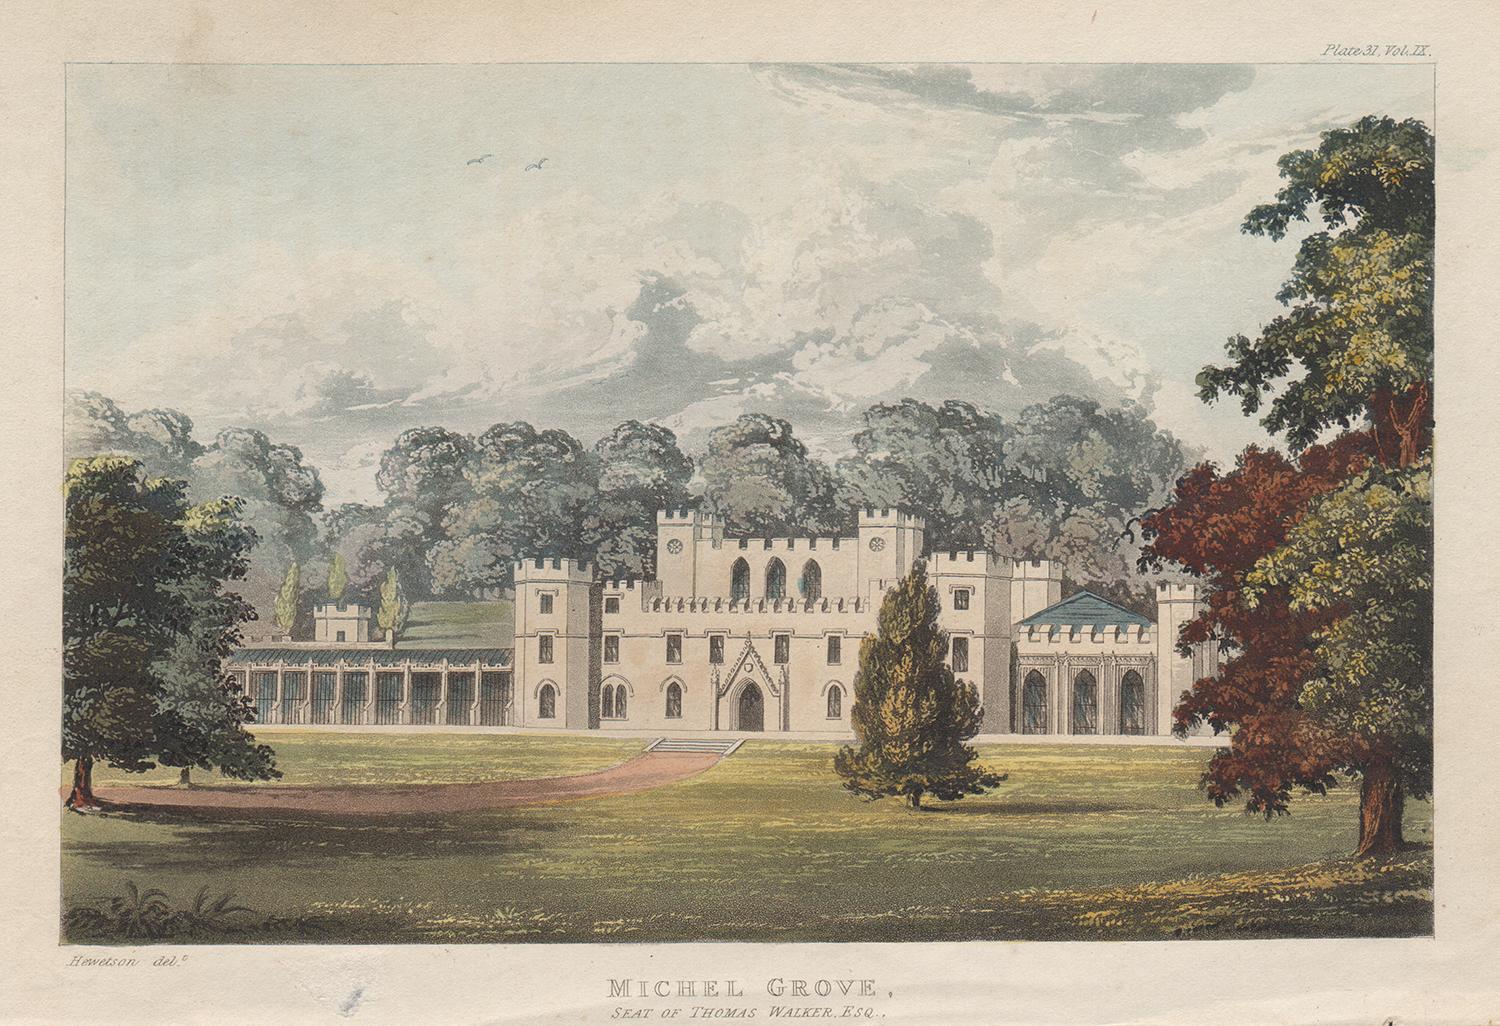 Unknown Landscape Print - Michel Grove, Sussex English Regency country house colour aquatint, 1818